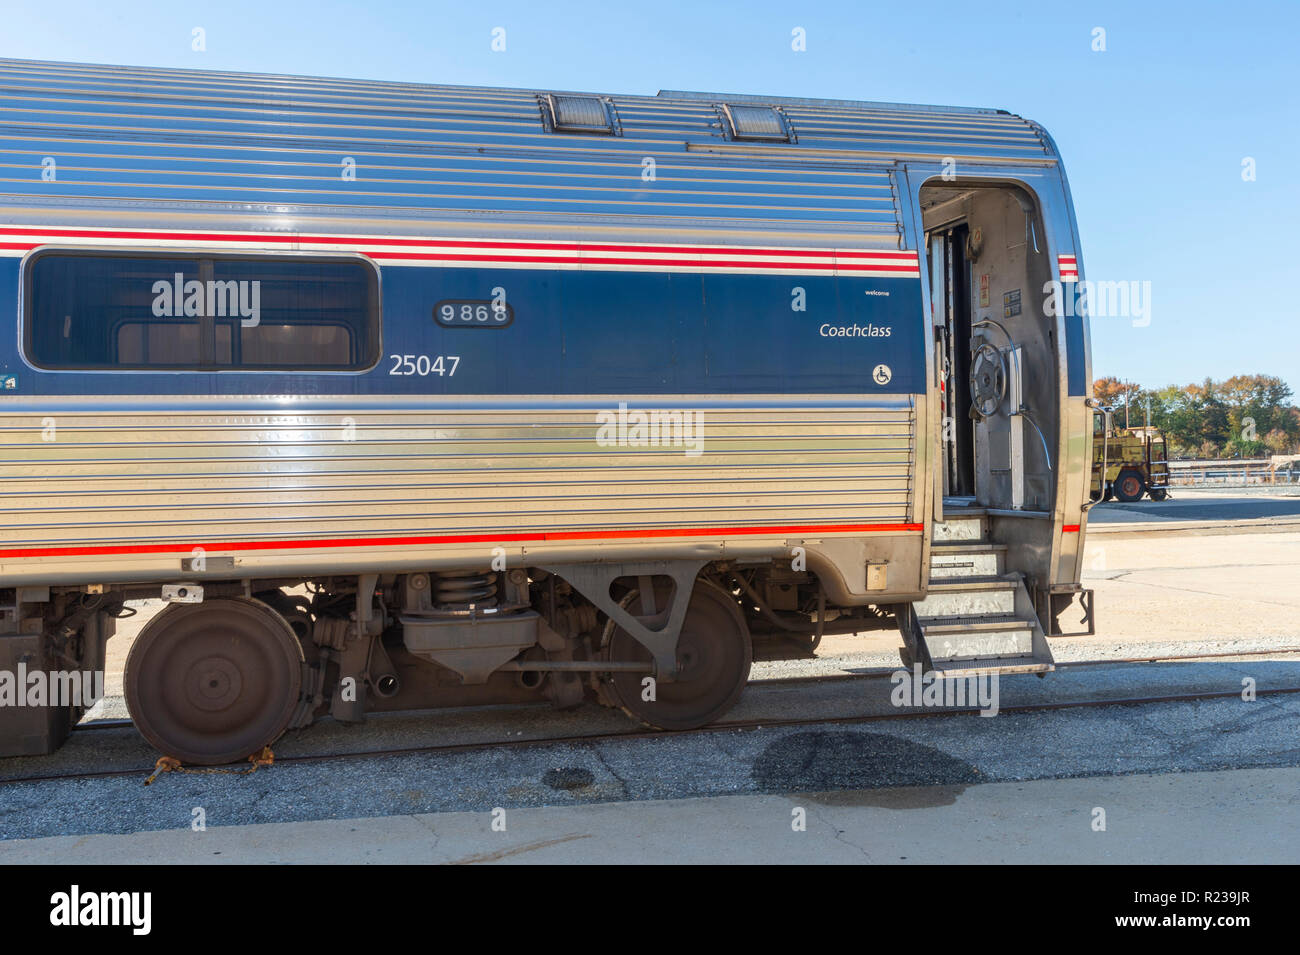 Exterior Of Amtrak Rail Car Train, USA Stock Photo